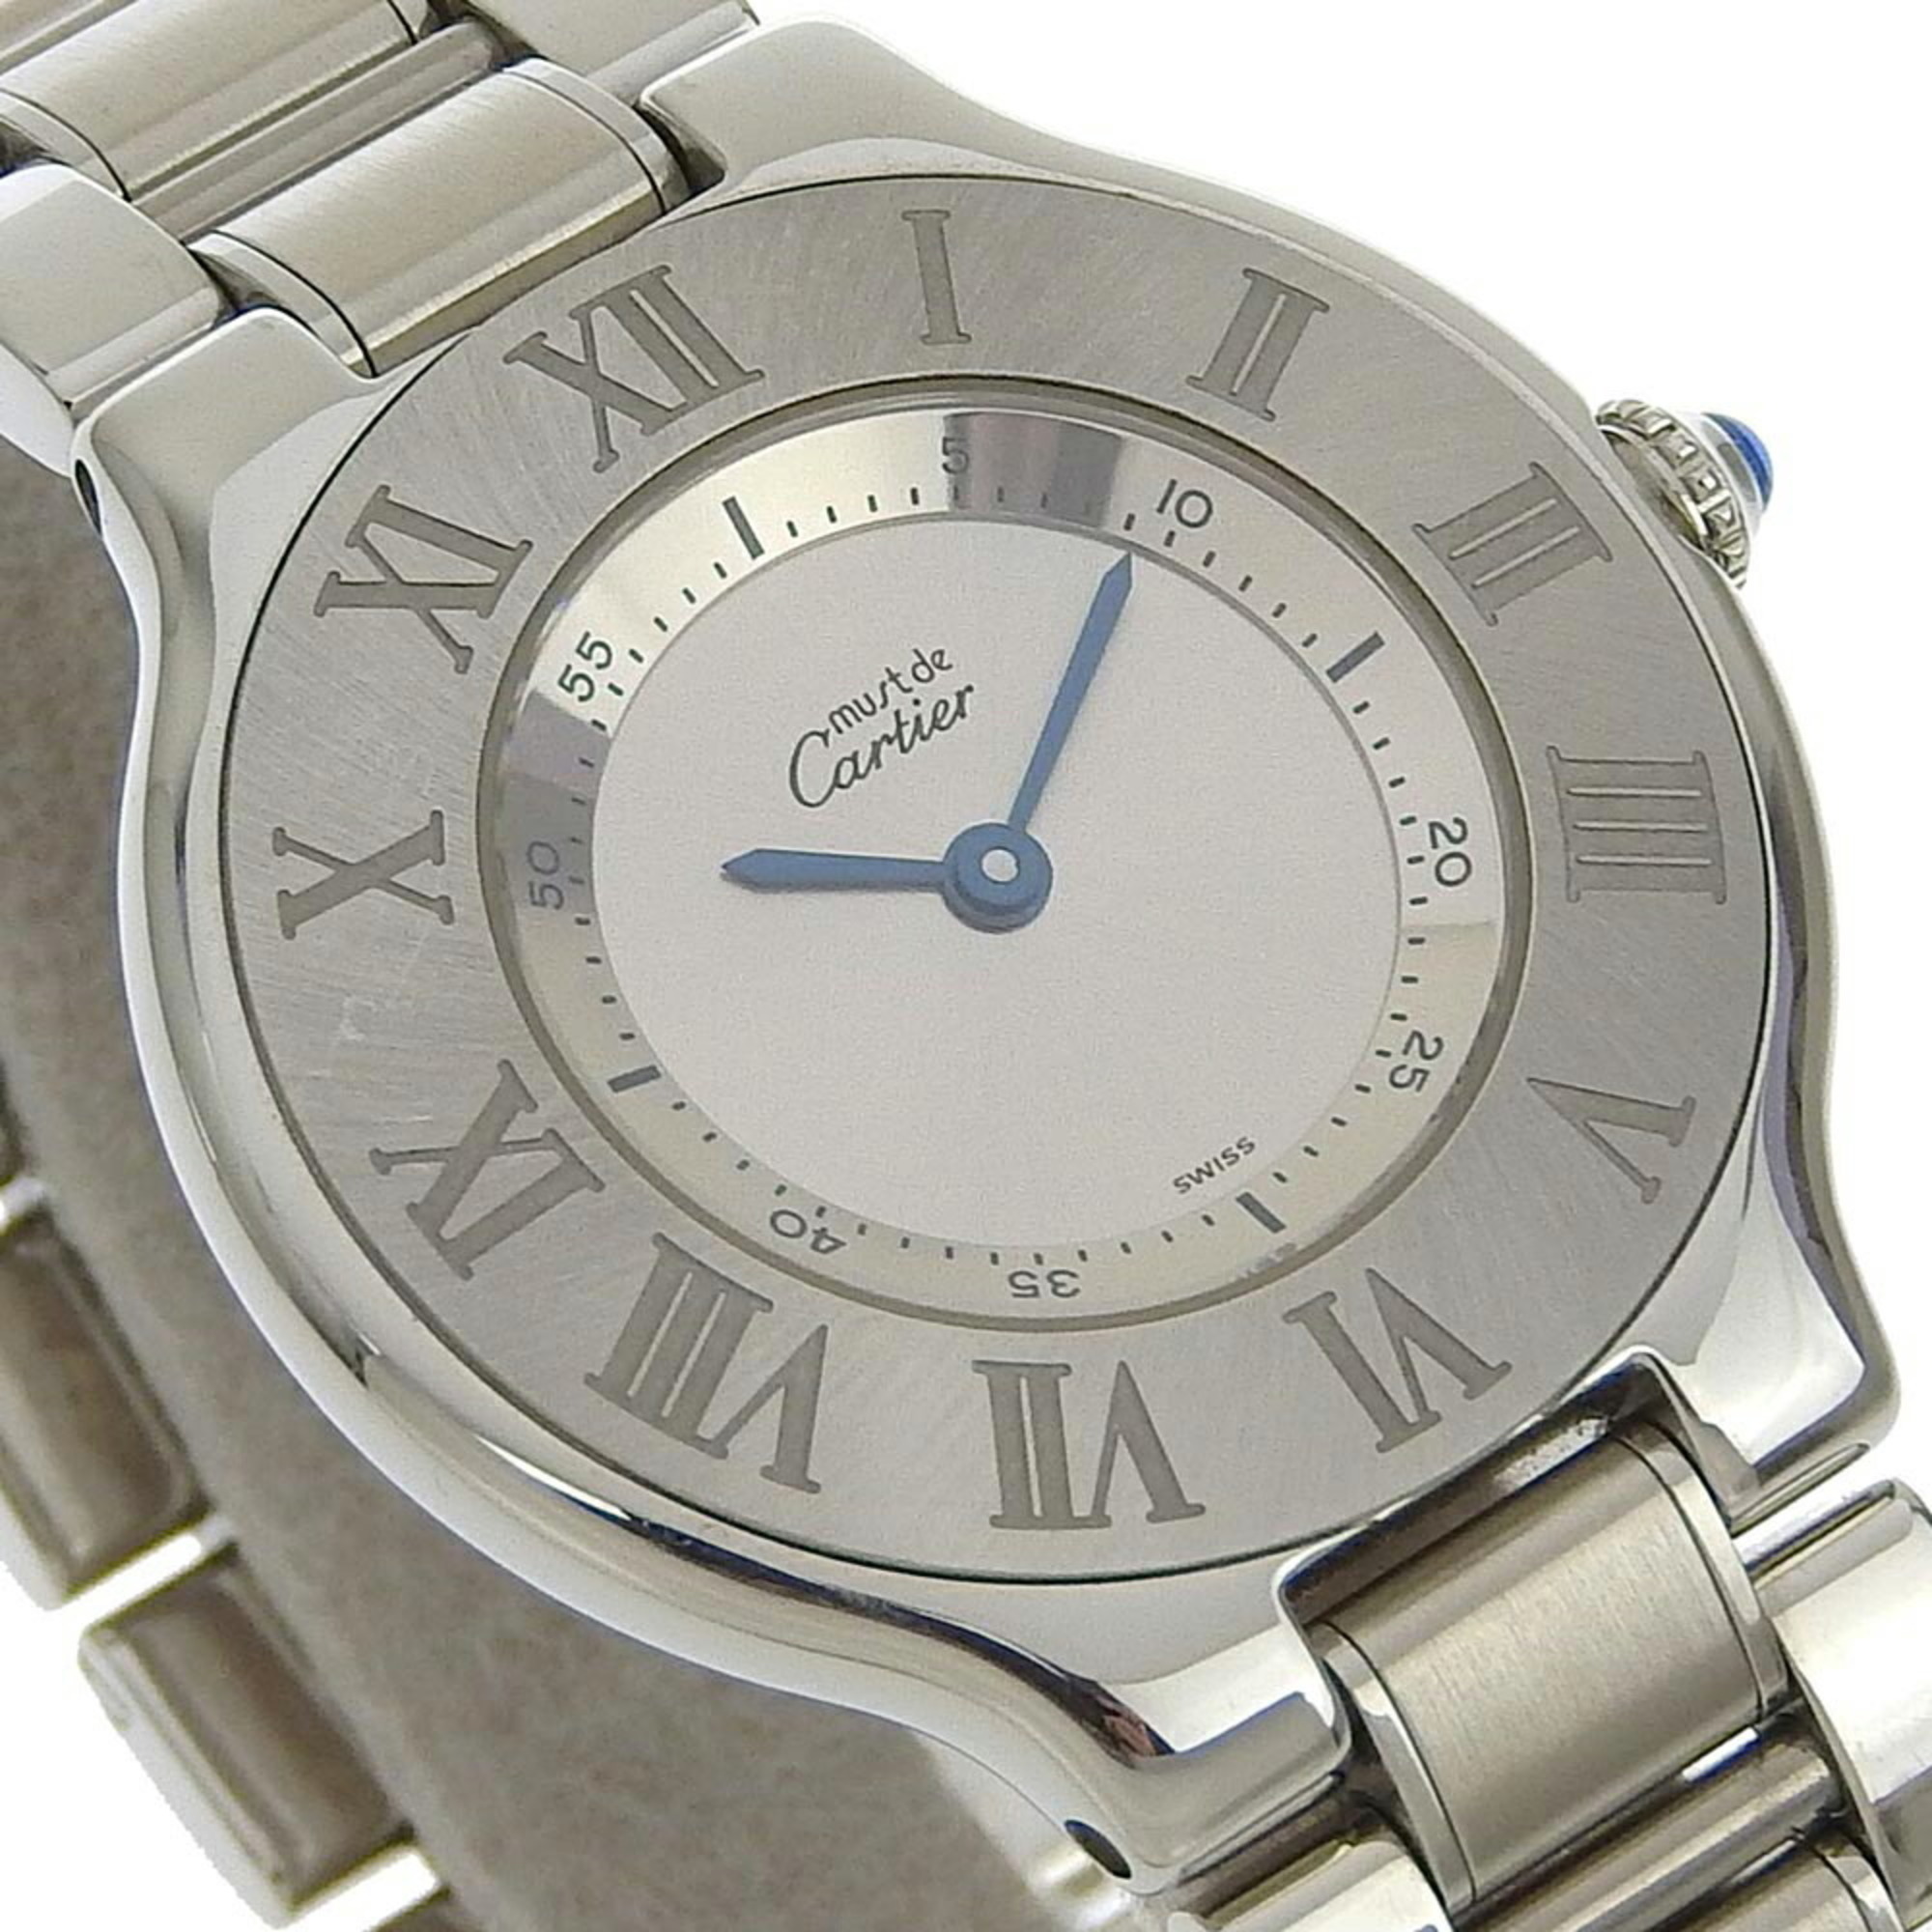 Cartier CARTIER Must21 Watch 1330 Stainless Steel Quartz Analog Display Silver Dial Women's I220823005